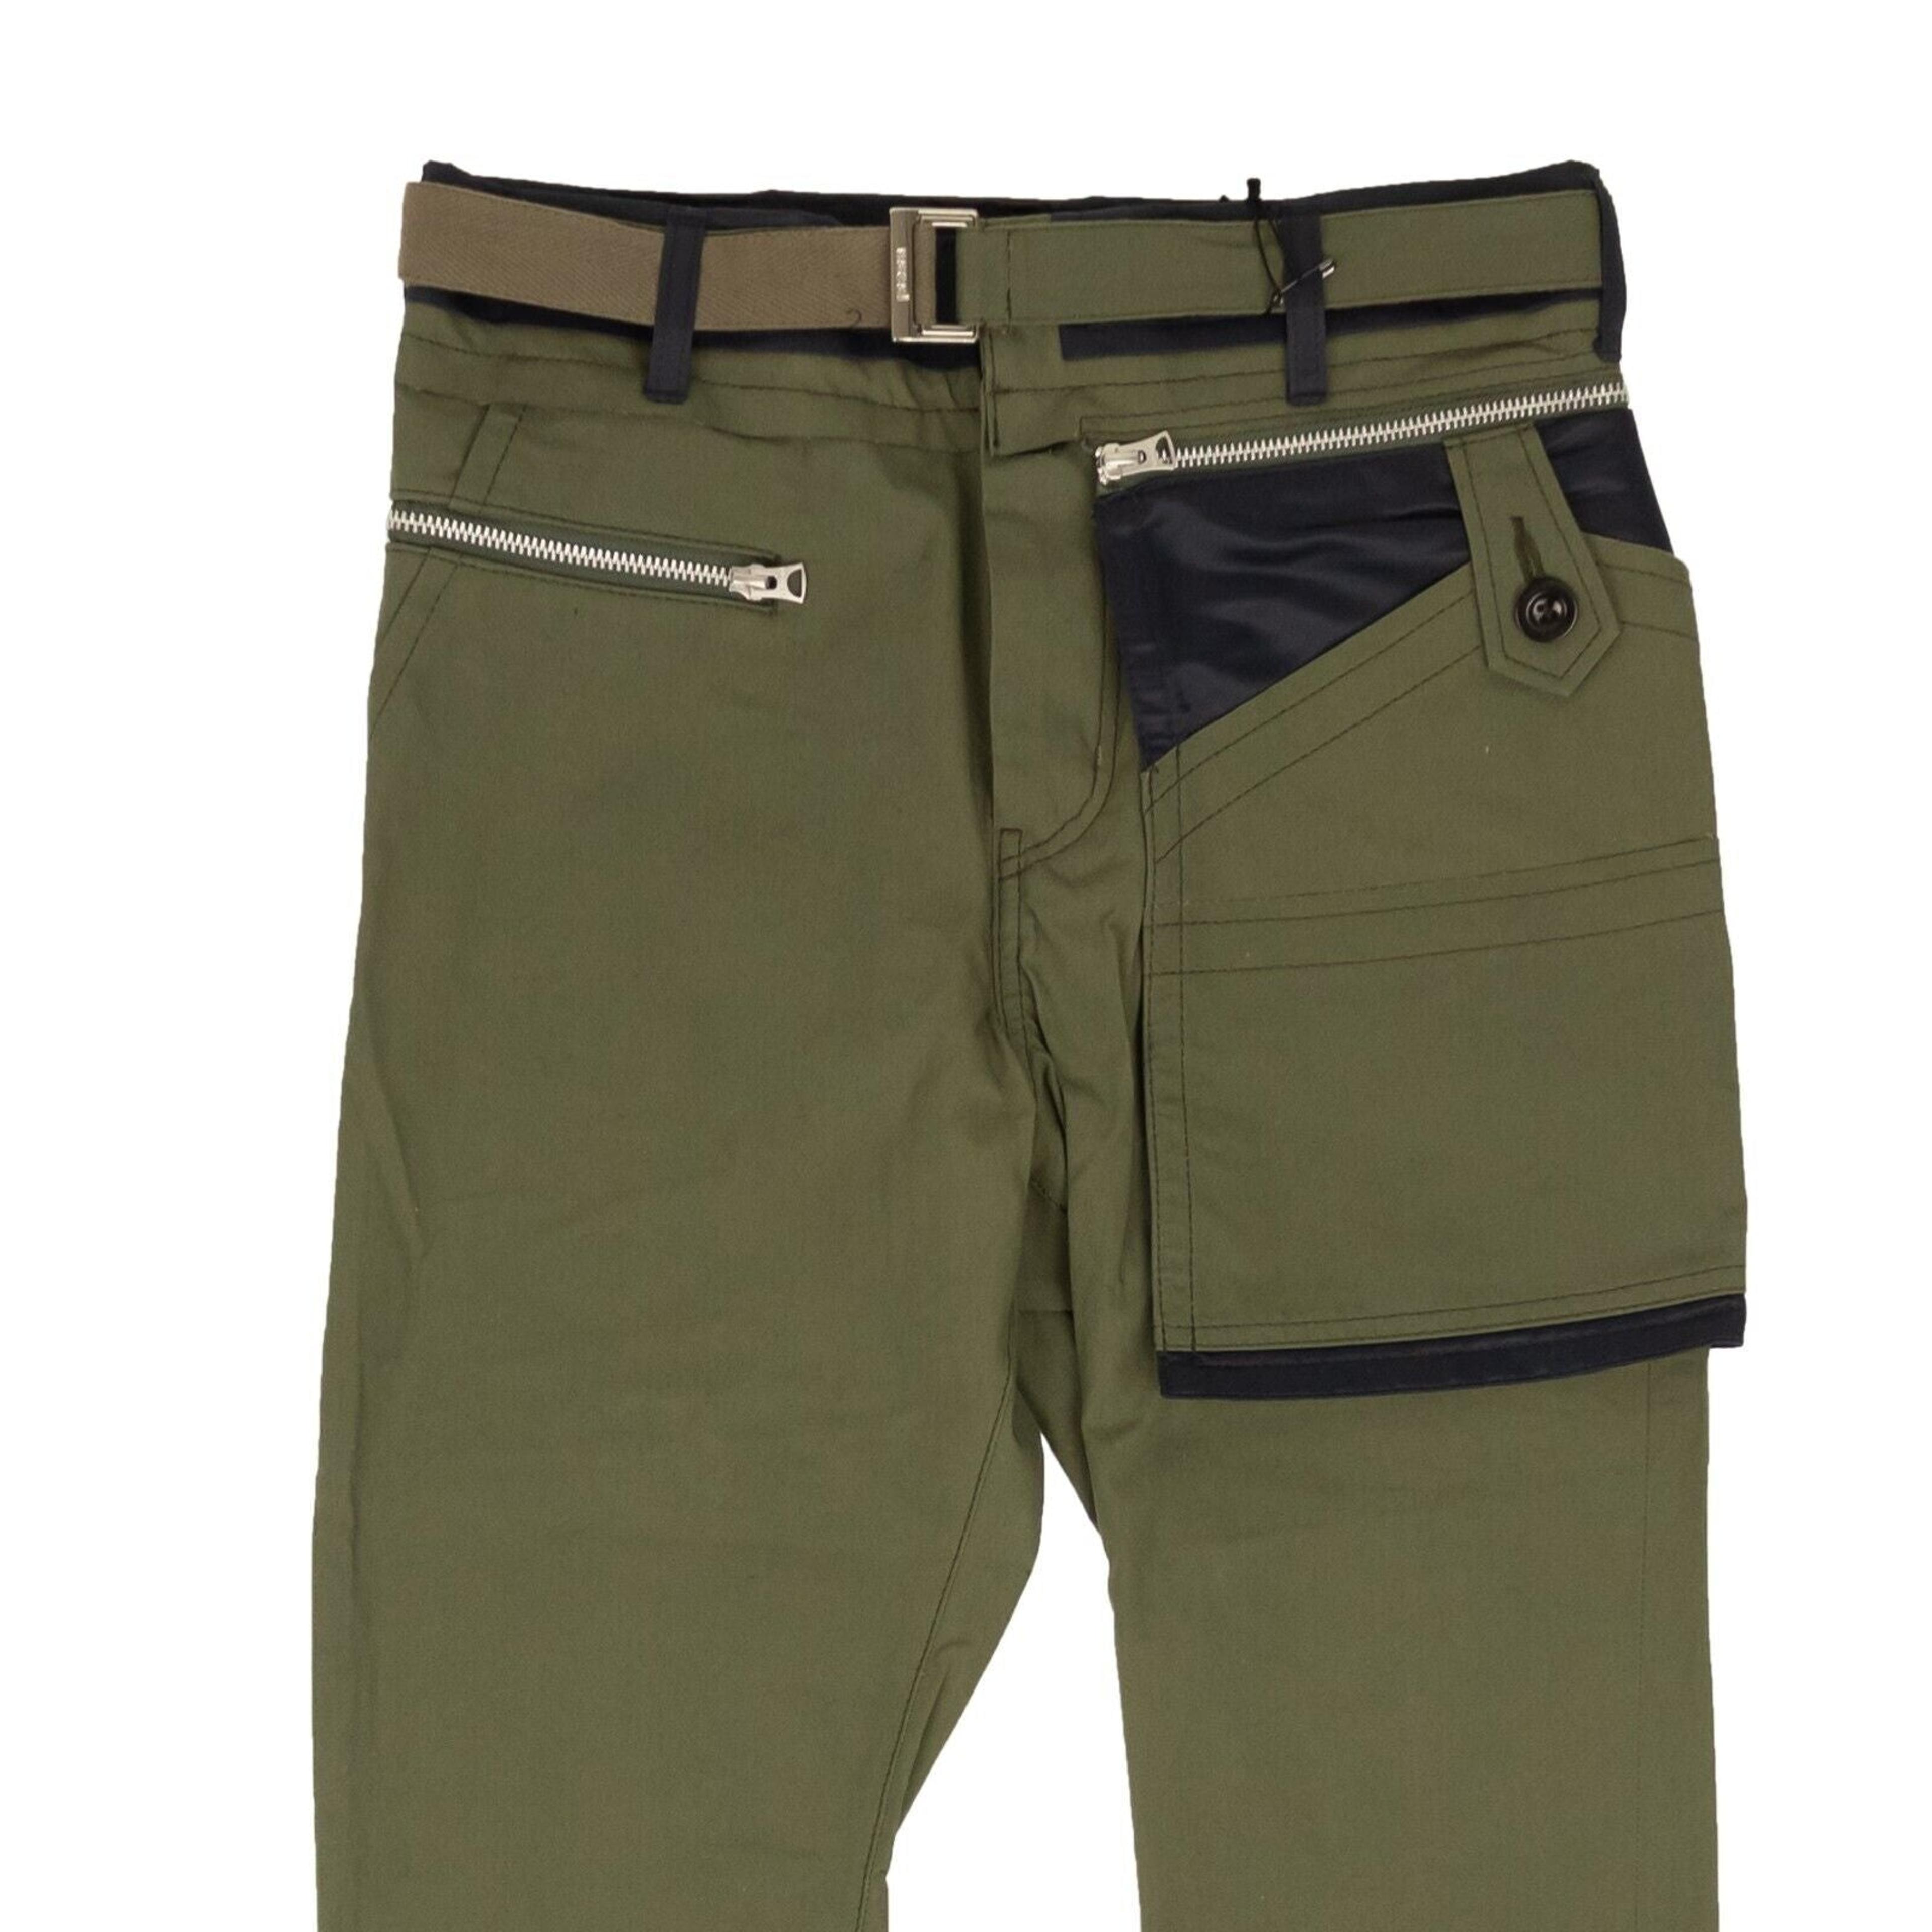 Alternate View 1 of Dark Khaki Green Cotton Zip Pocket Cargo Pants